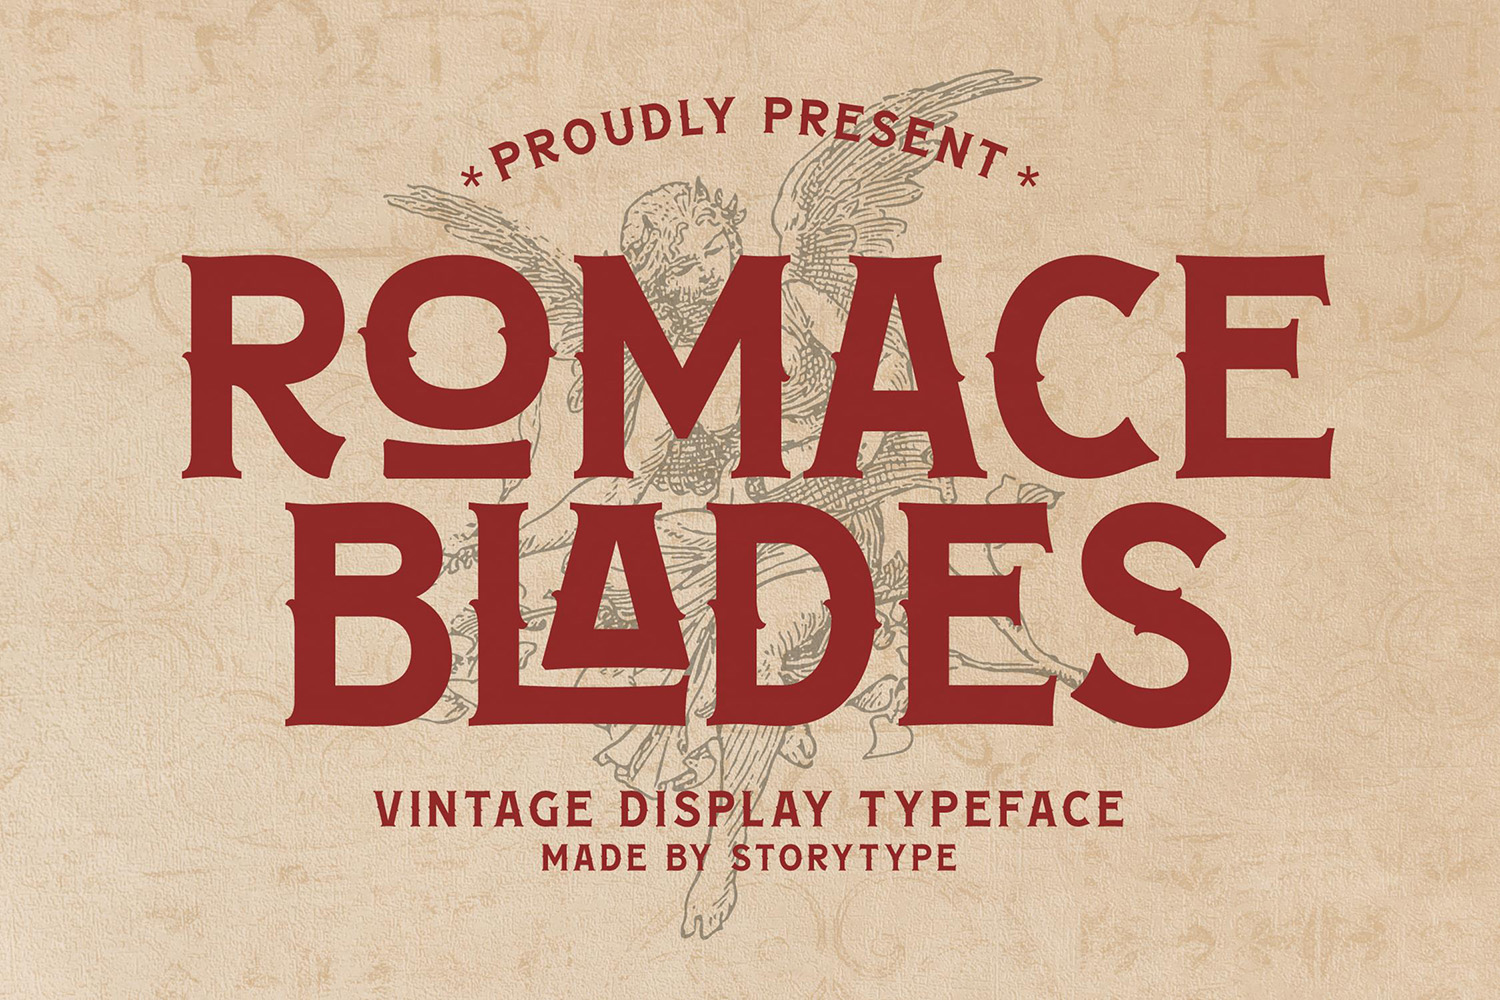 Romace Blades Free Font